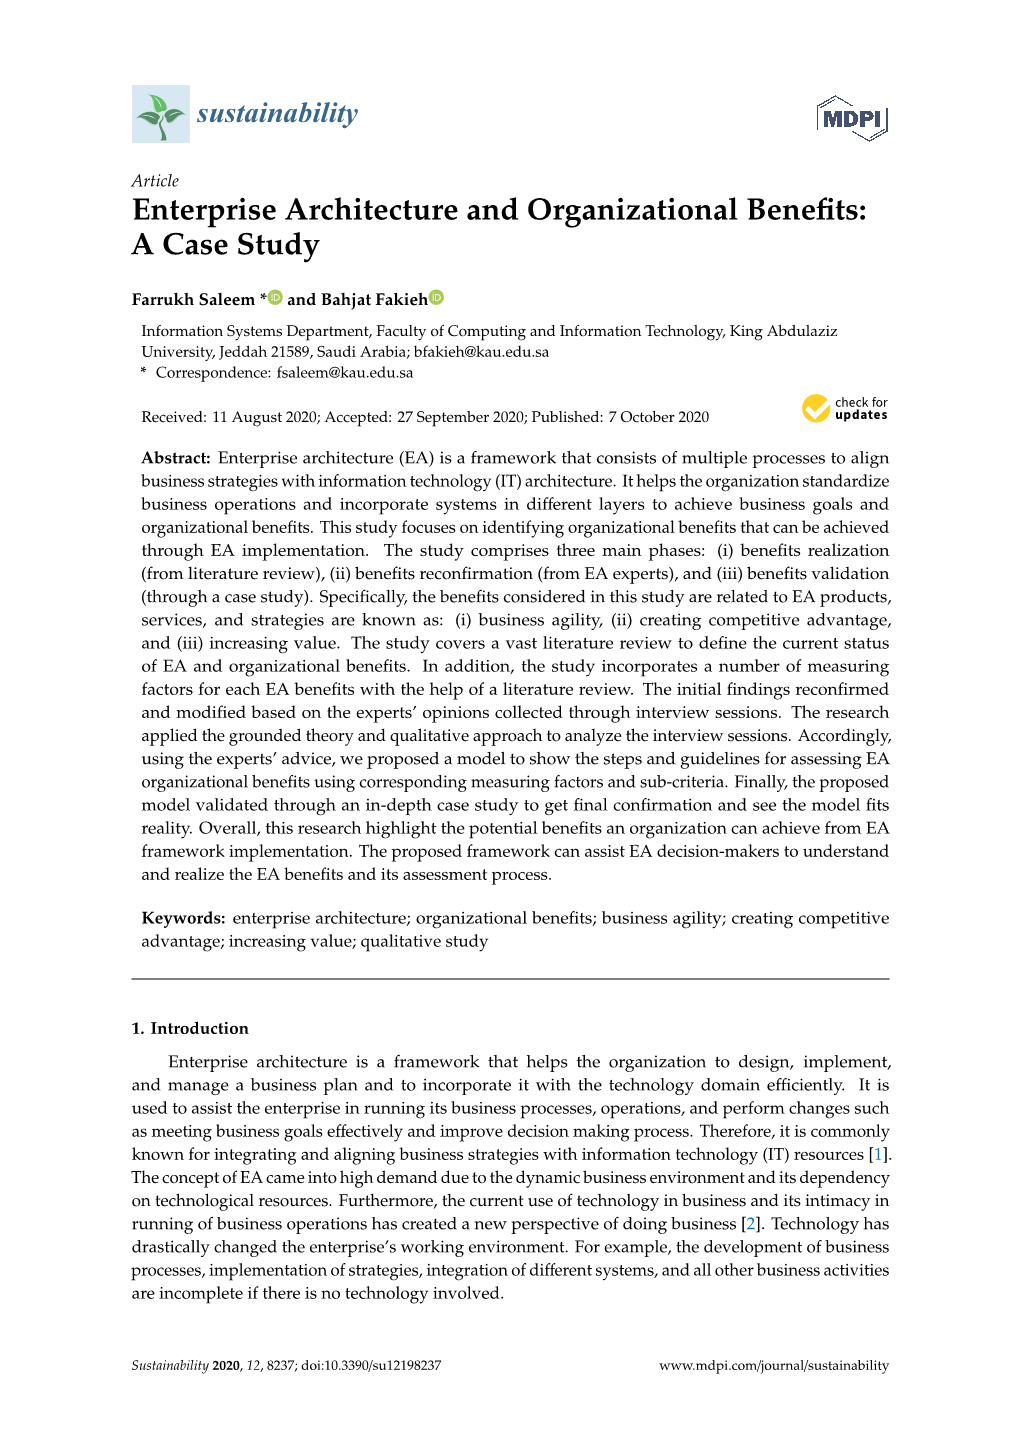 Enterprise Architecture and Organizational Benefits: a Case Study